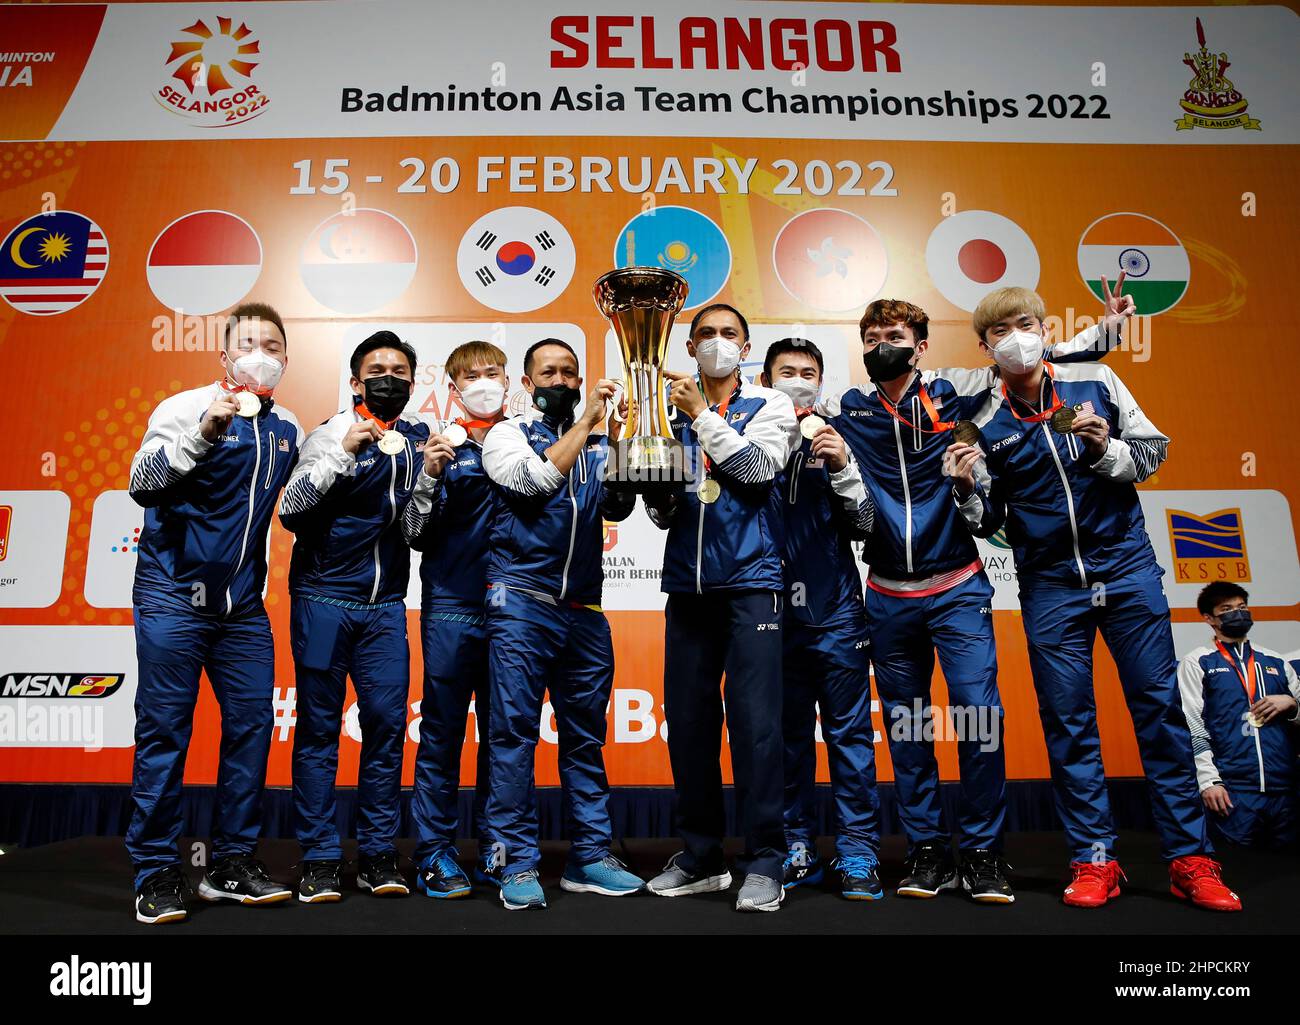 2022 badminton asia team championships live